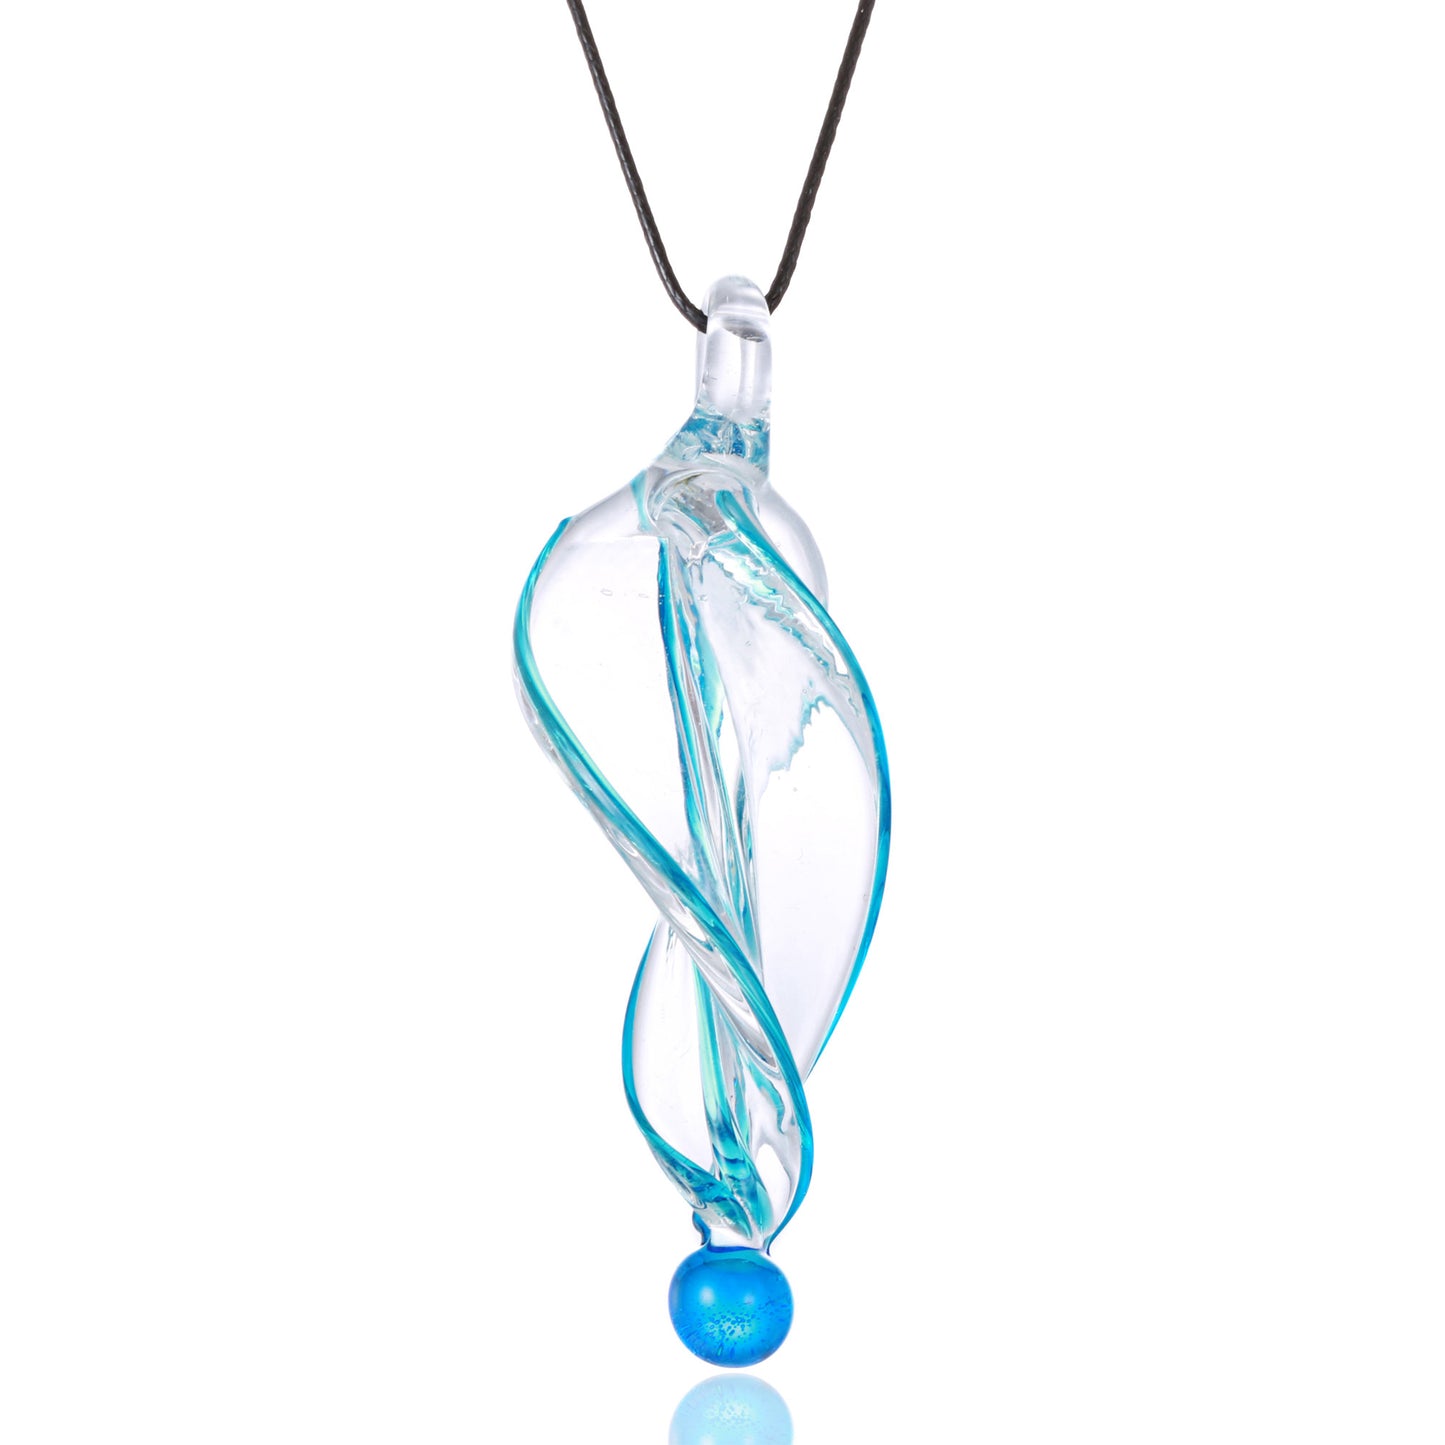 BESHEEK Handmade Murano Inspired Blown Glass Lampwork Art Light Blue Tornado Twist Necklace Pendant ? Handcrafted Artisan Hypoallergenic Italian Style Jewelry